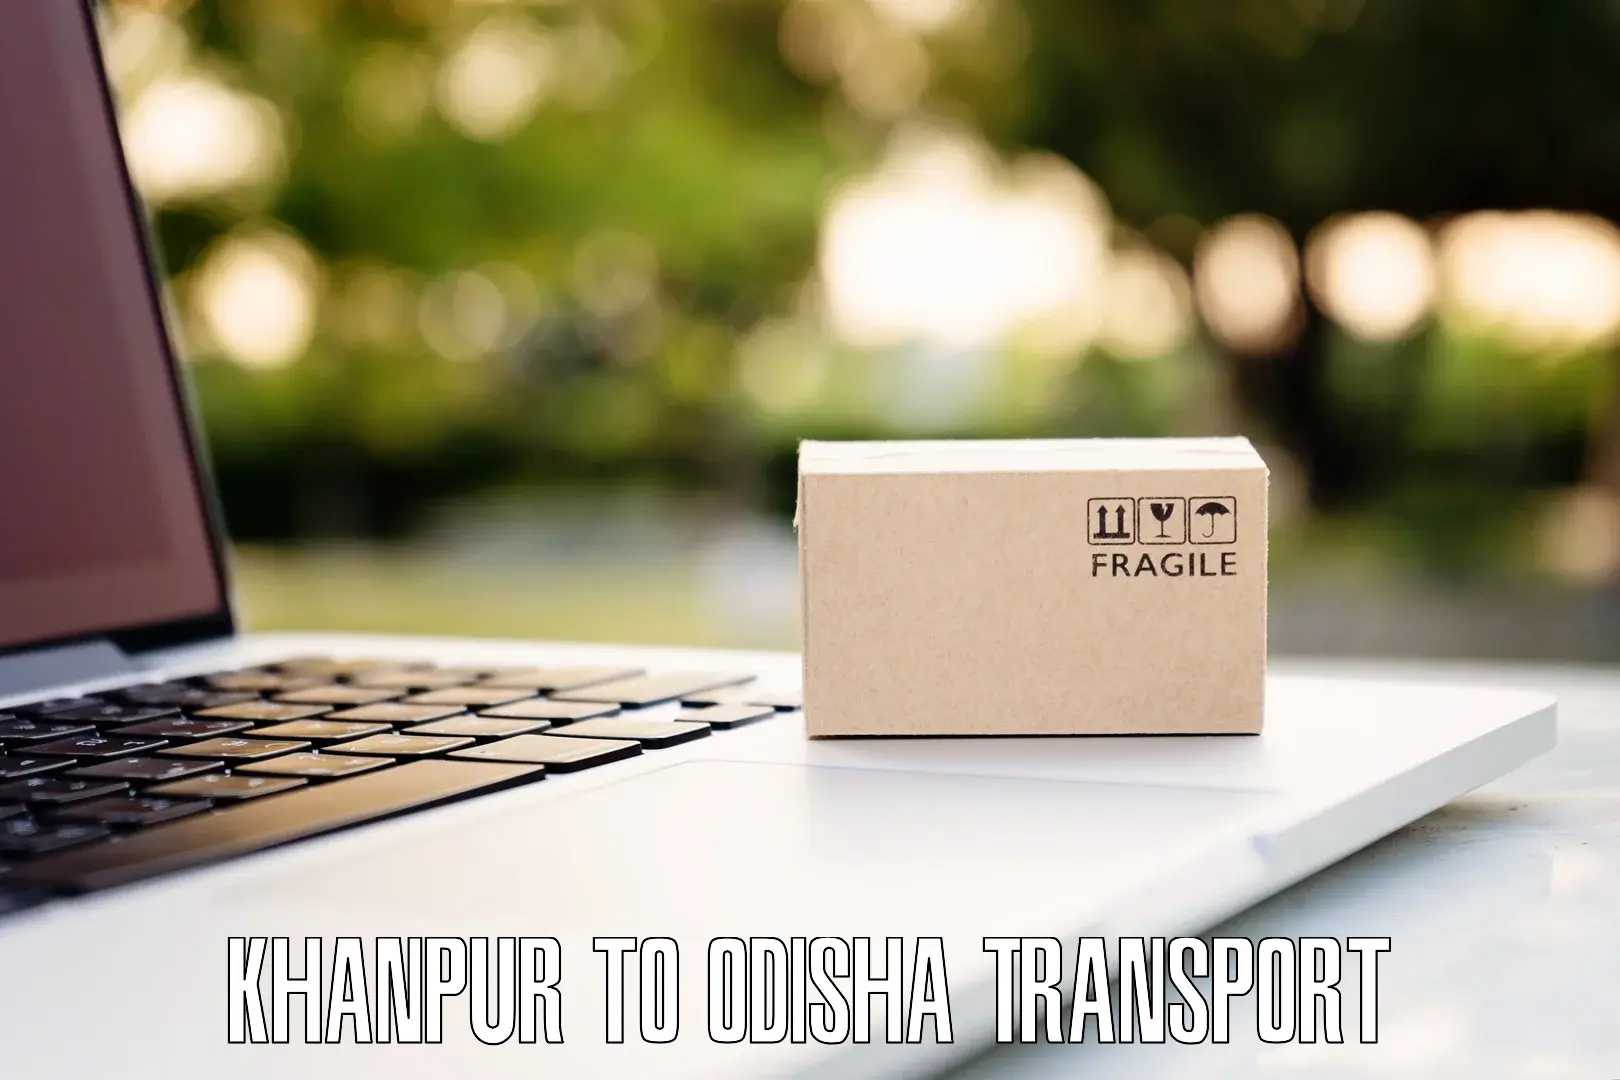 Shipping partner Khanpur to Puri